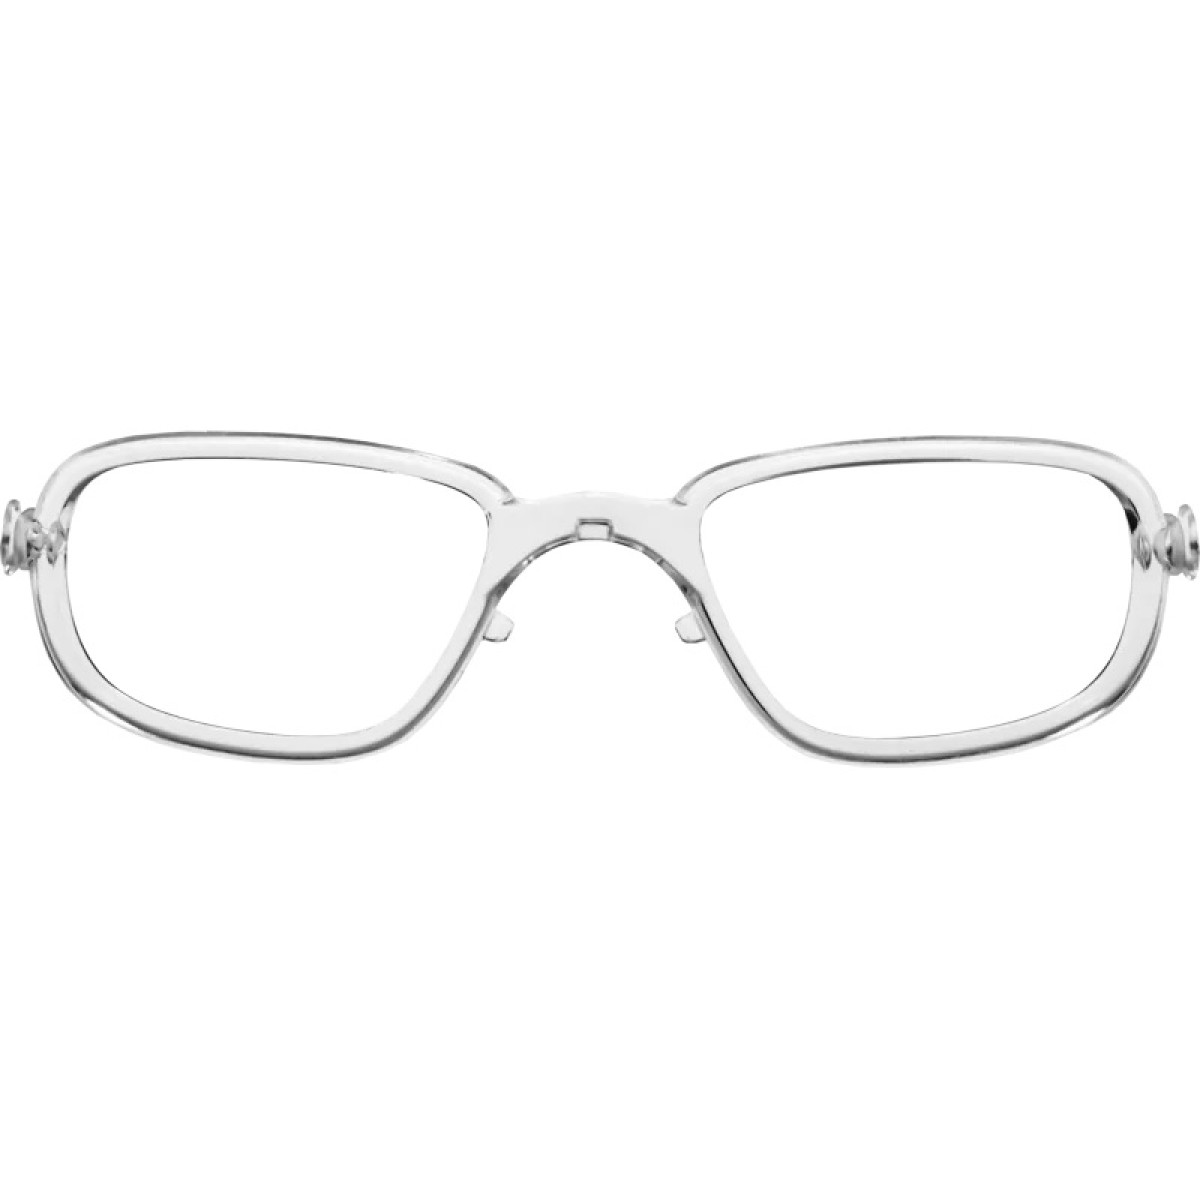 Optic sunglasses E670-1R GOG - view 3